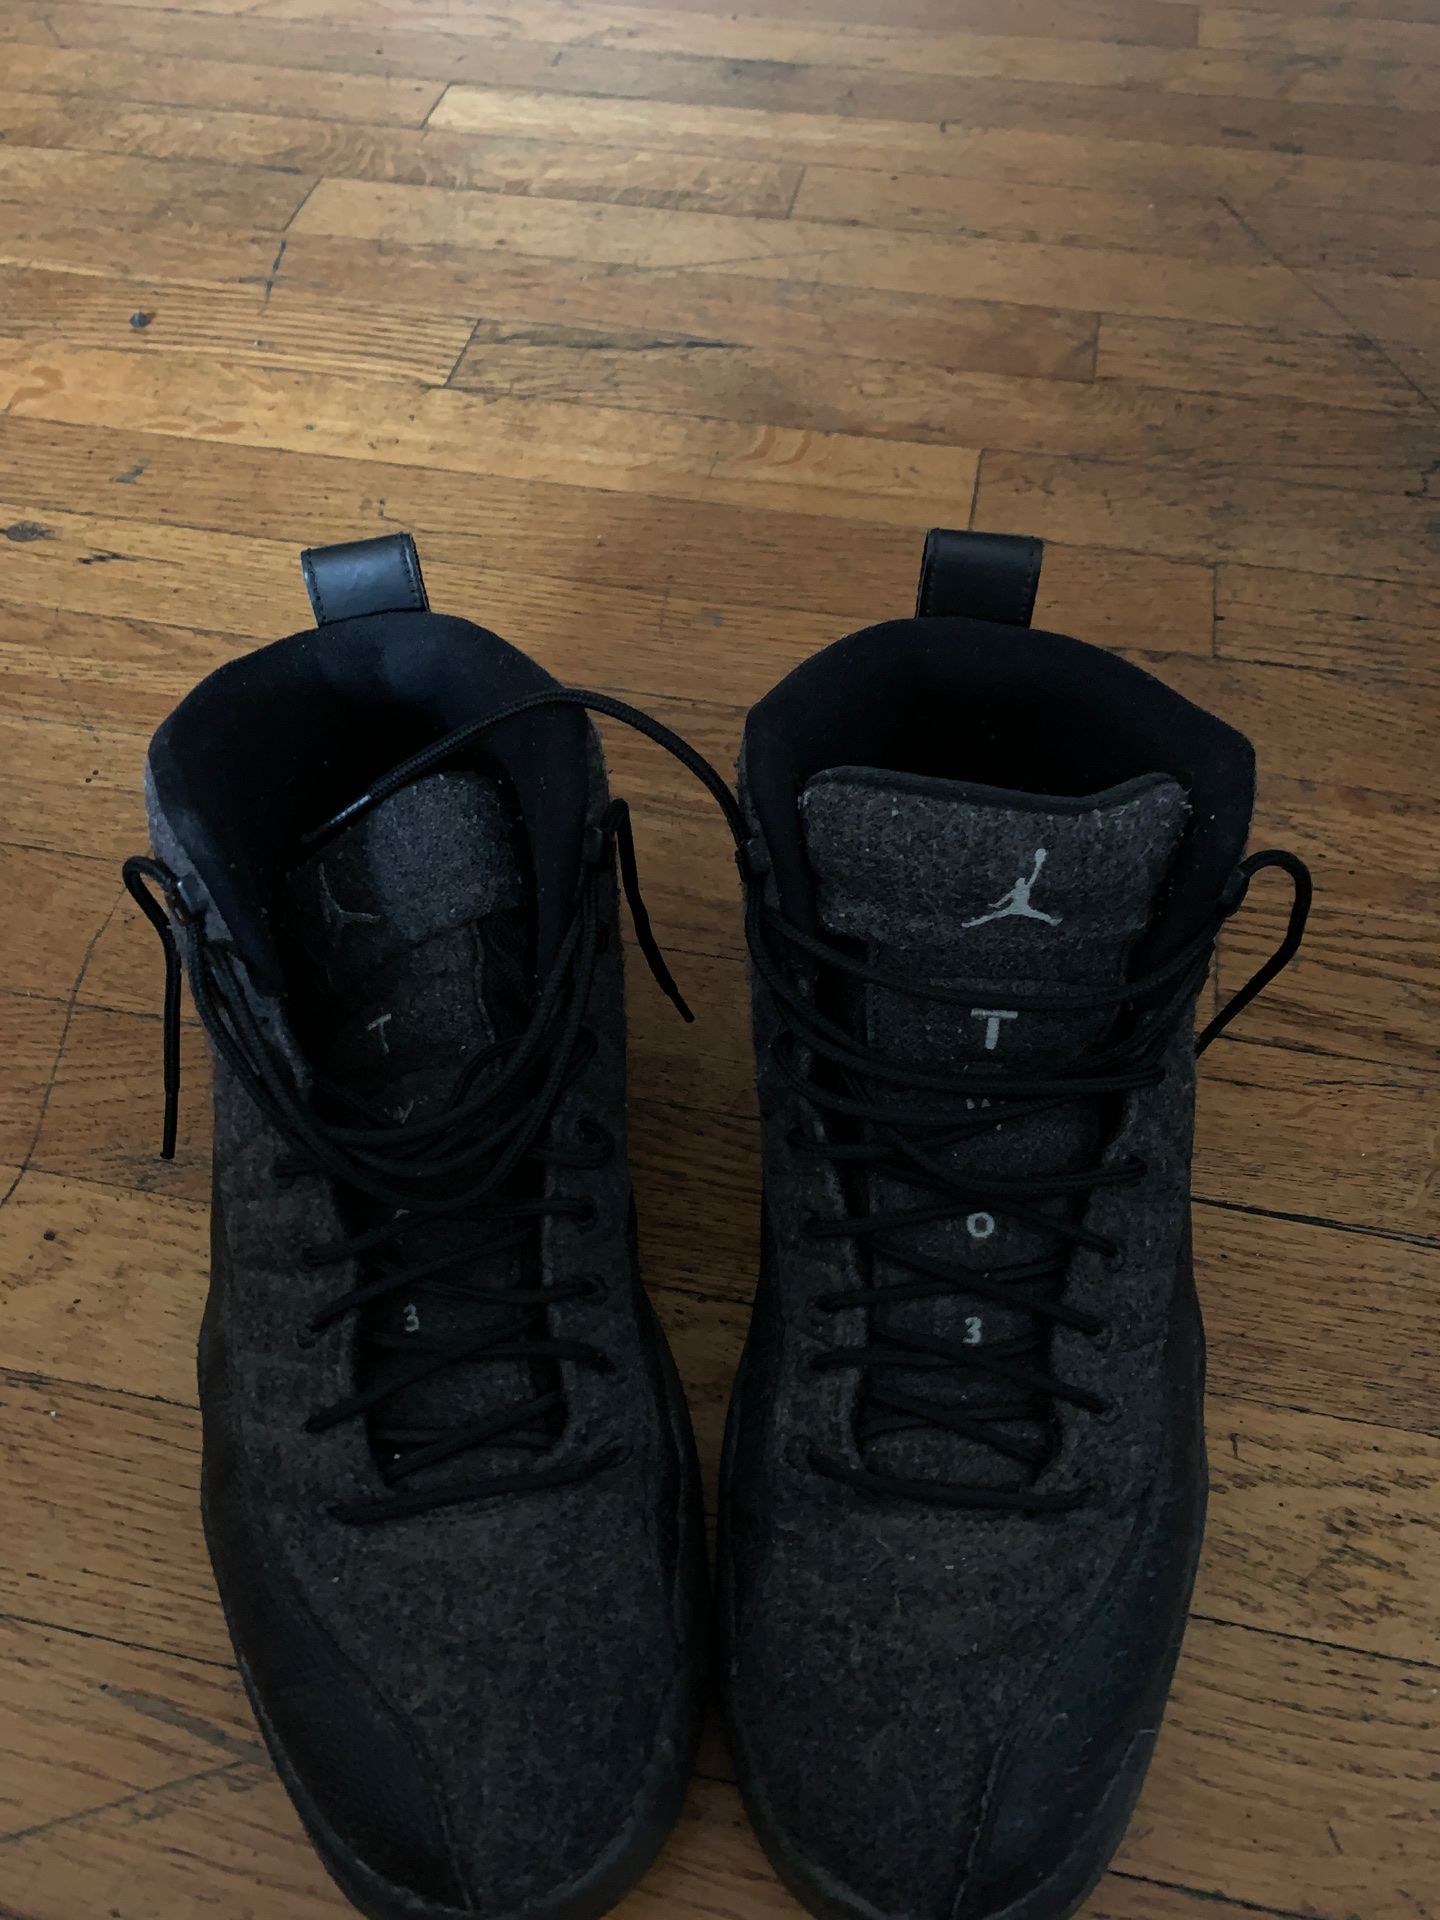 Jordans 12 size 10.5